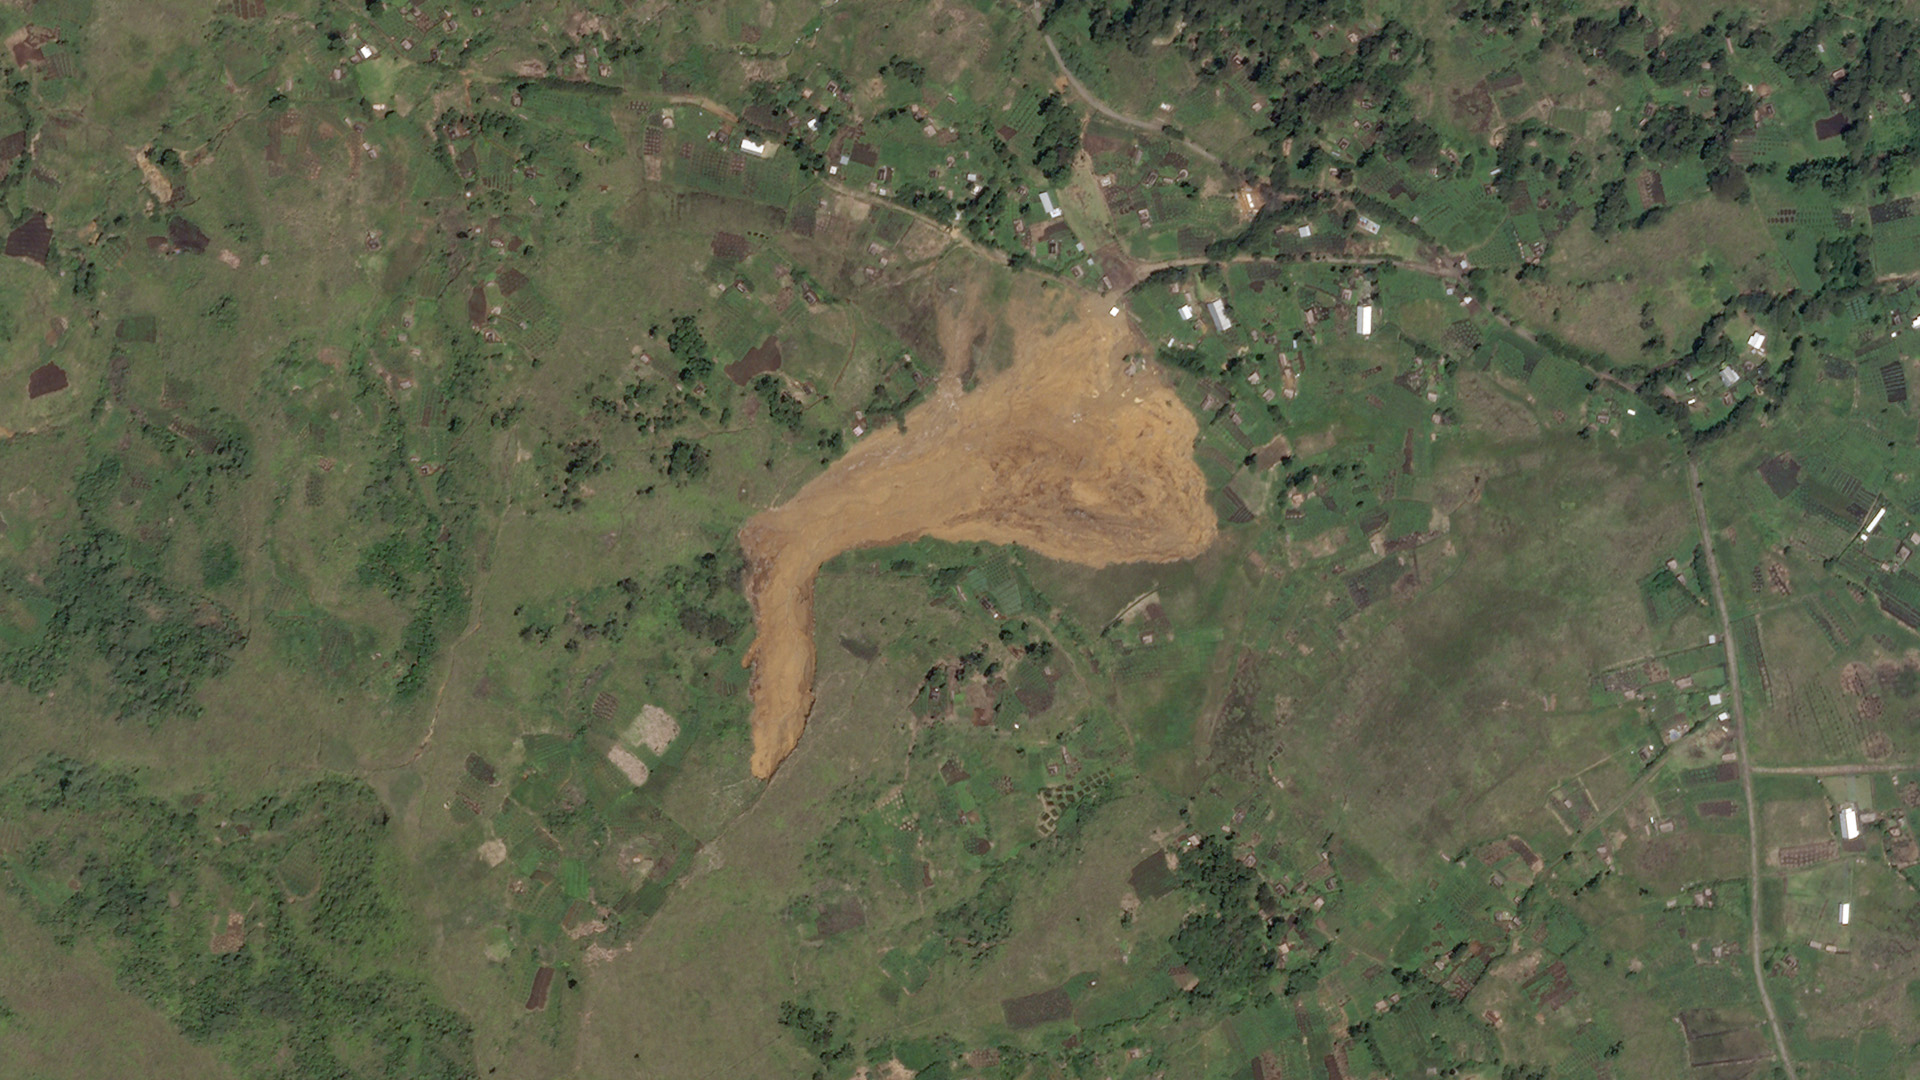 SkySat image of the Tendepo landslide